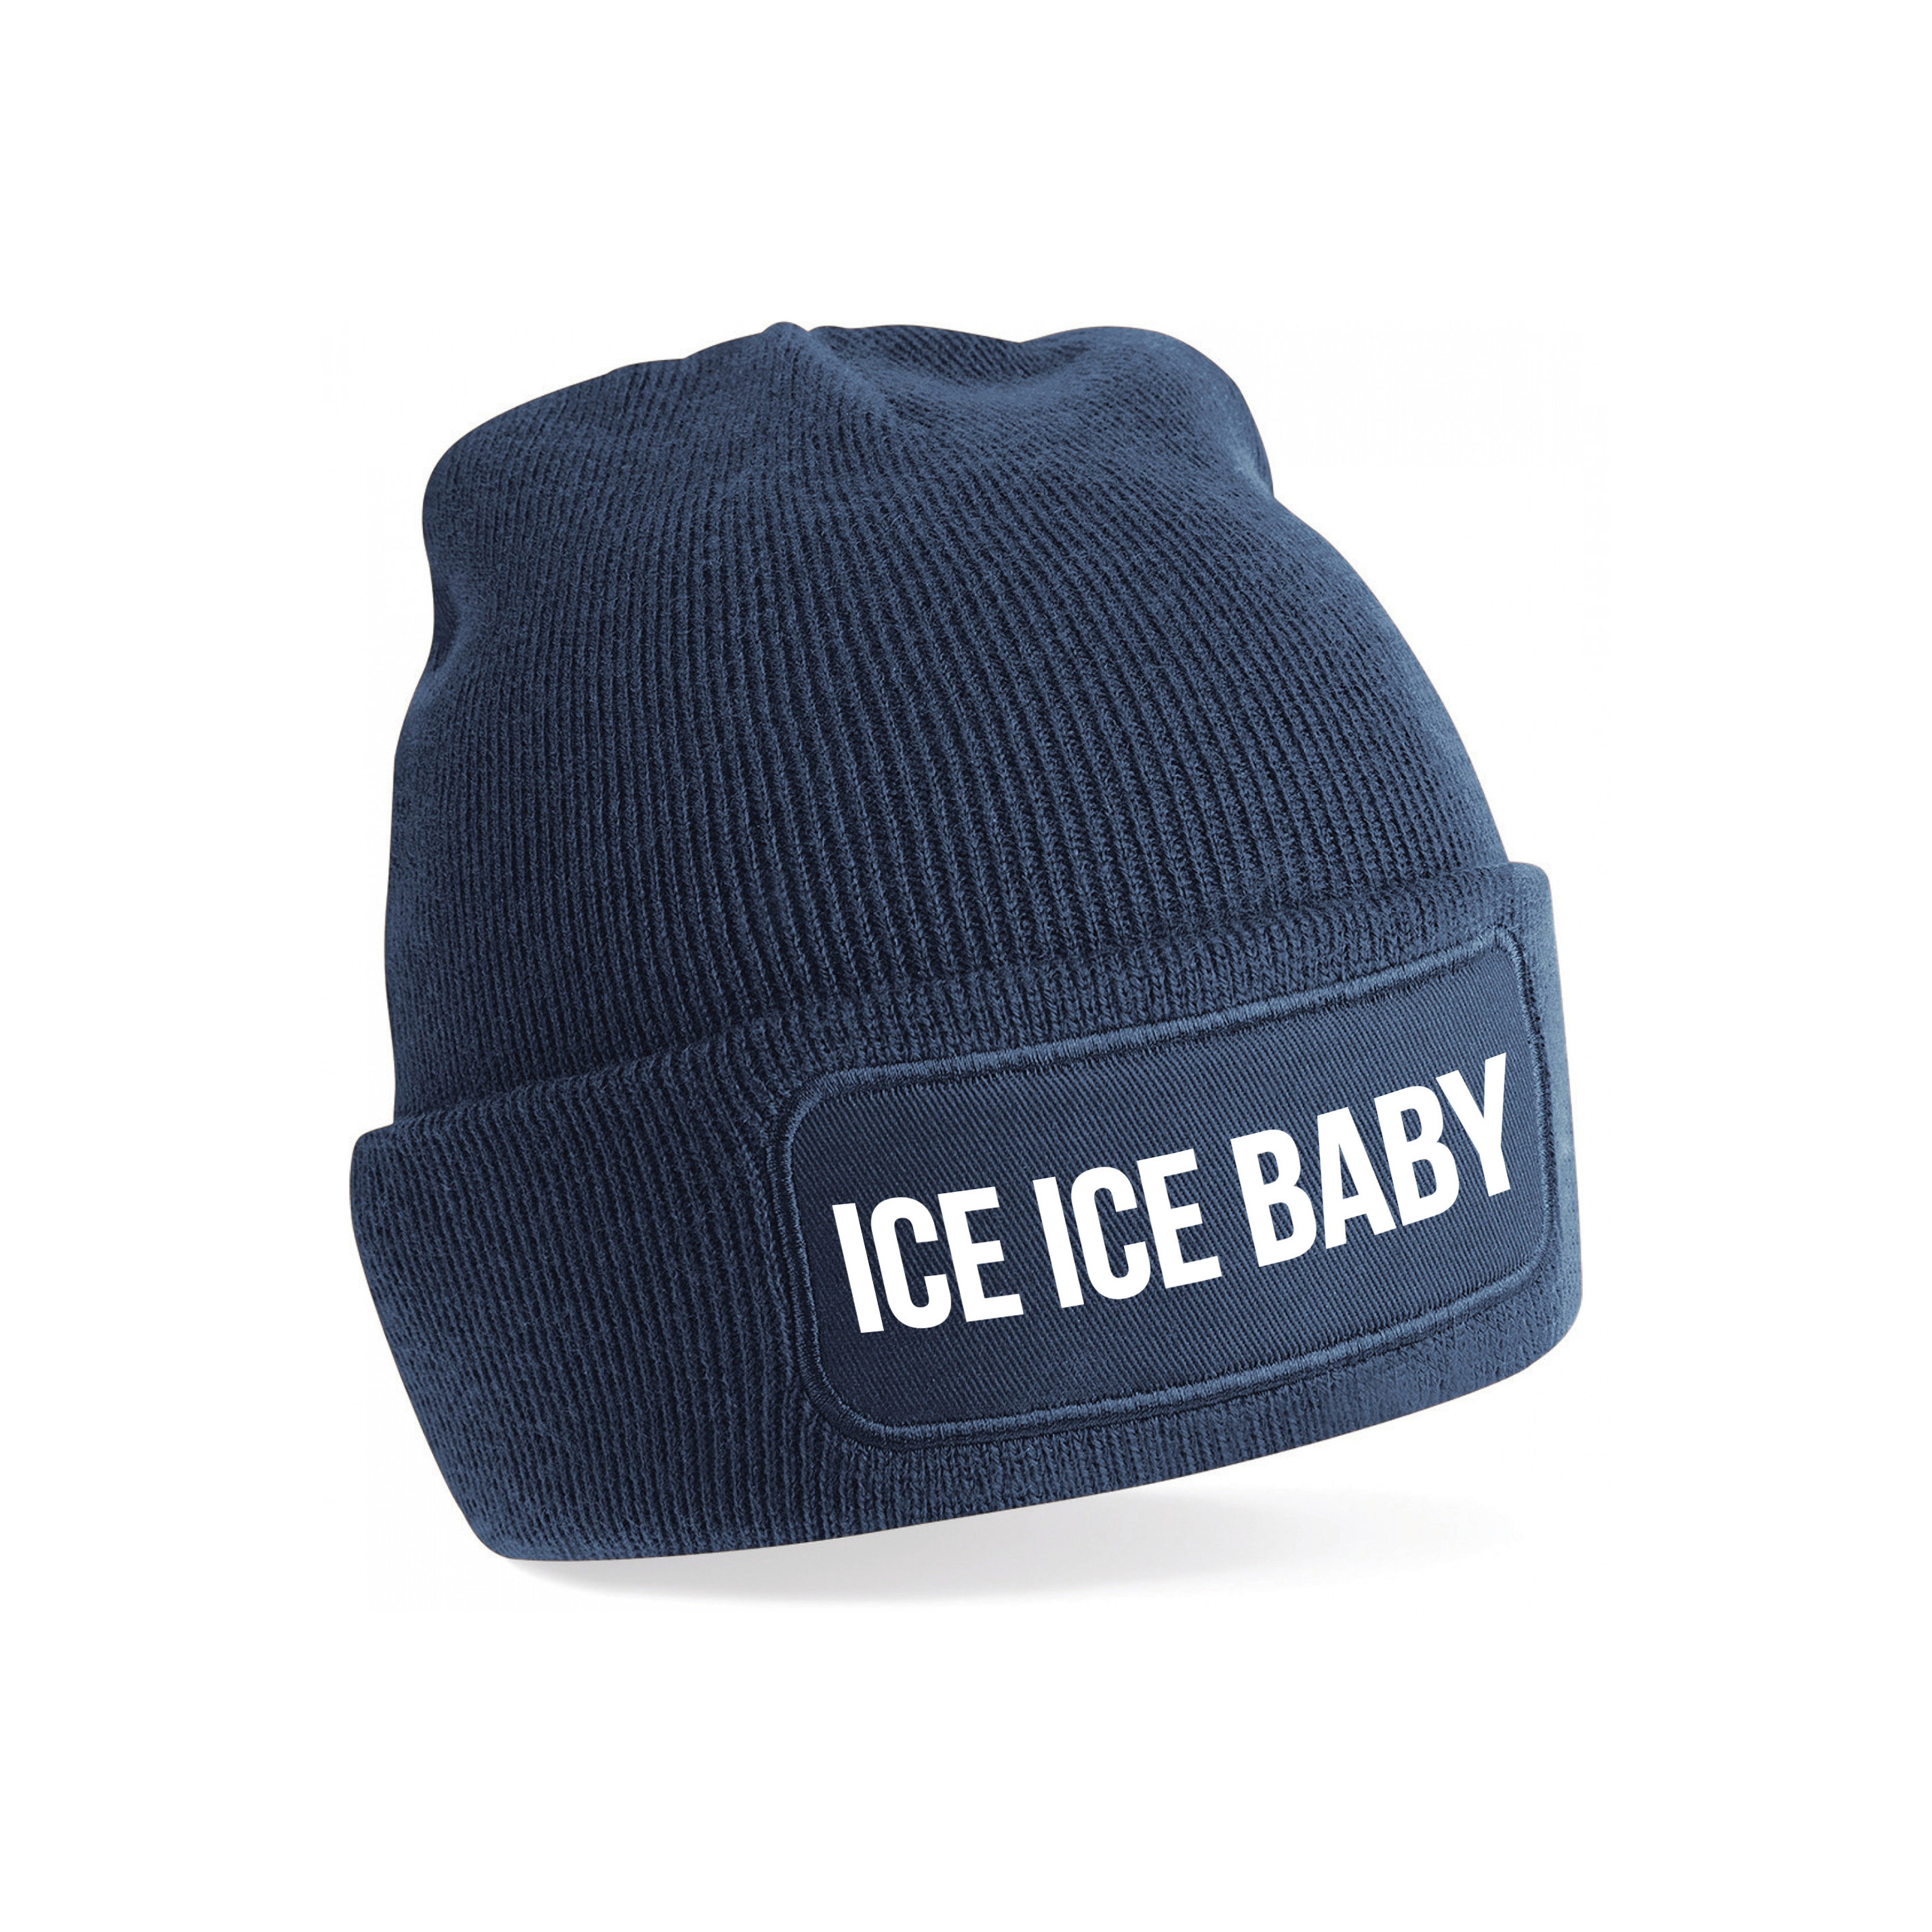 Ice ice baby muts unisex one size navy